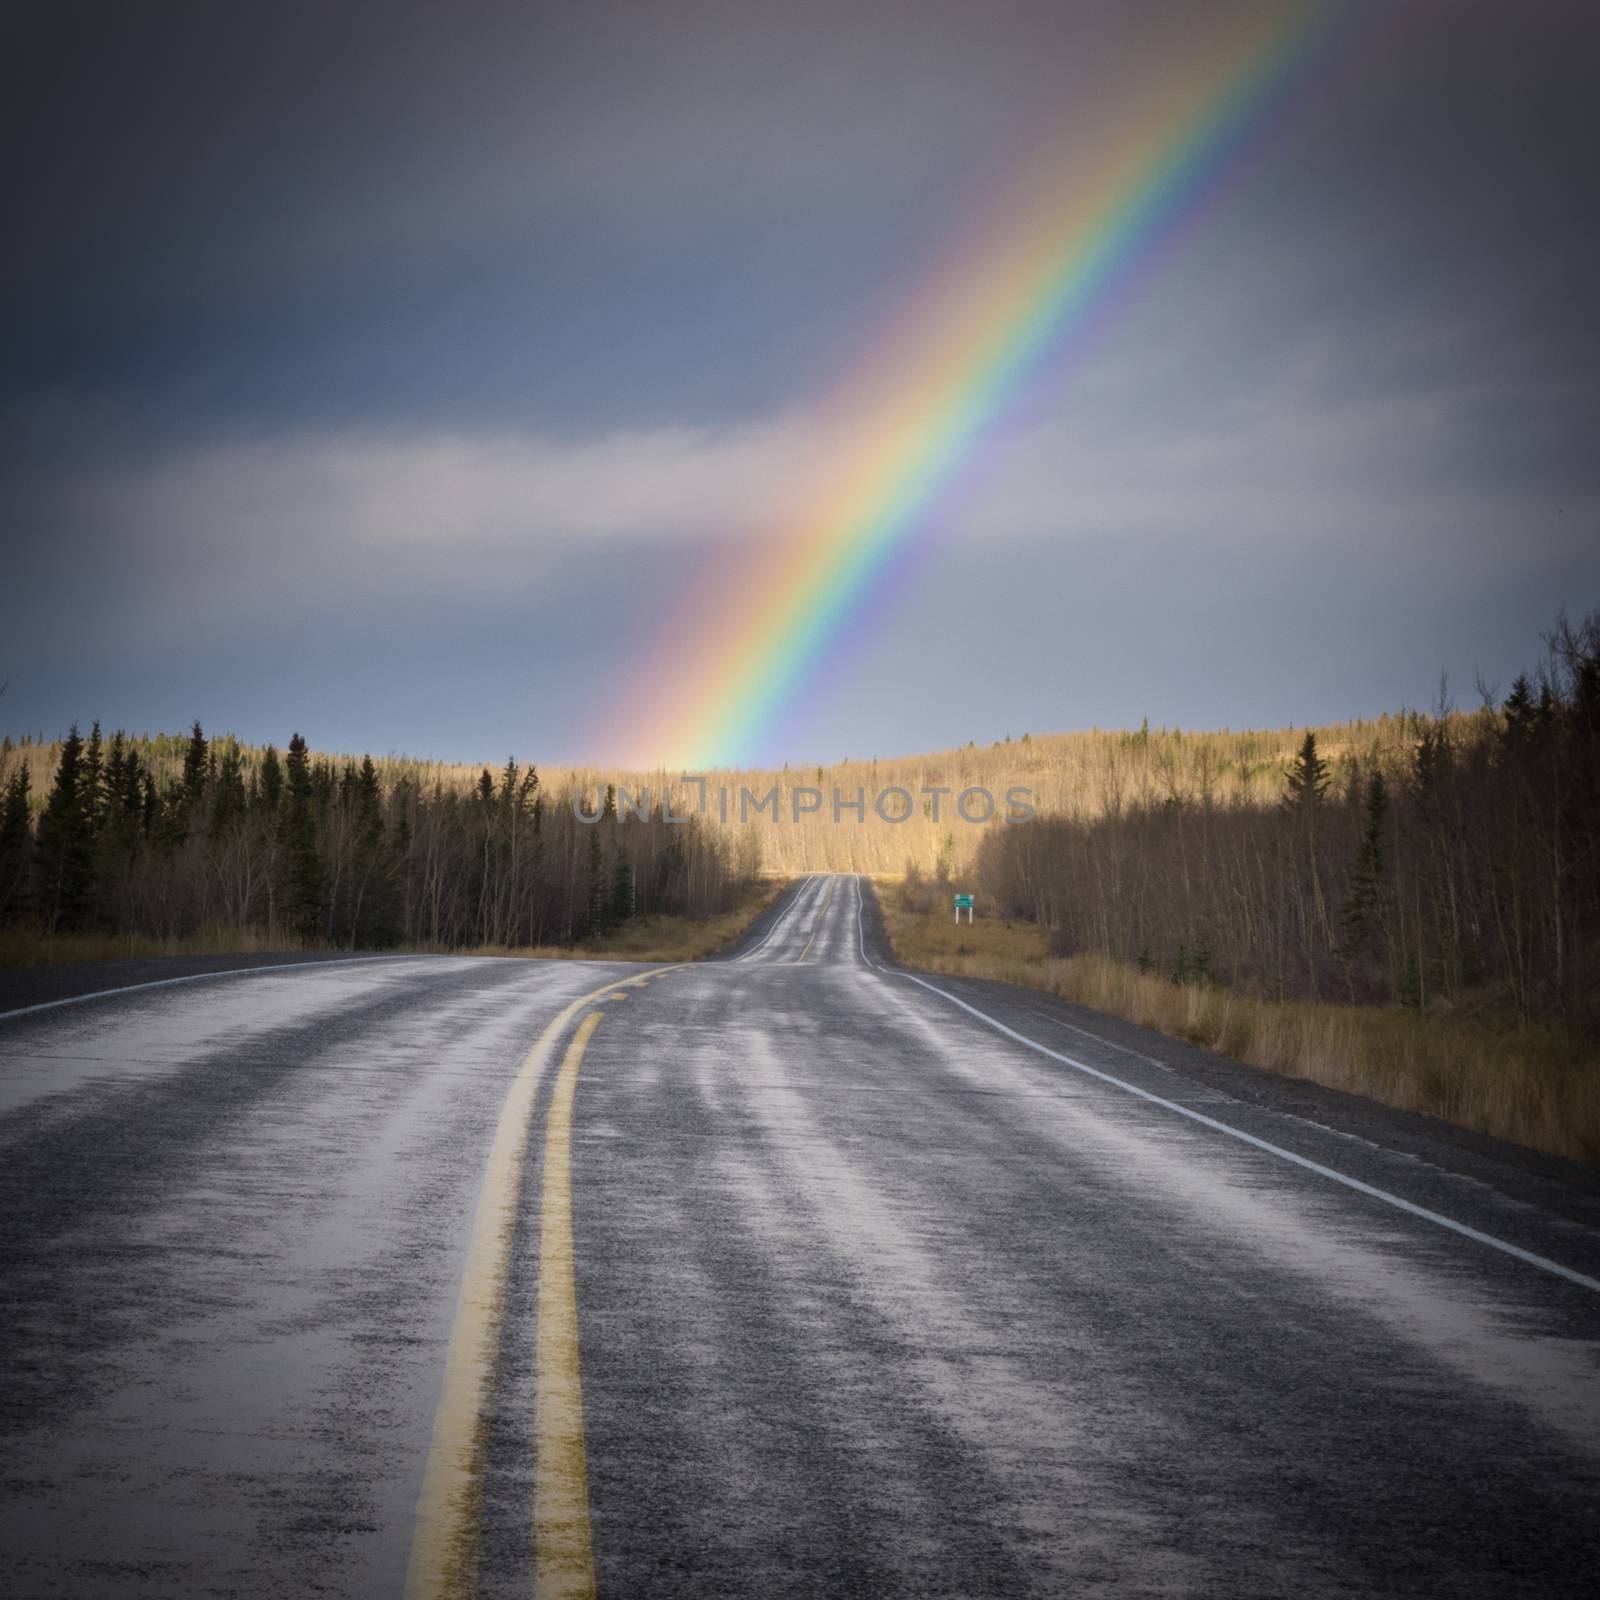 Rainbow country road dark Yukon nature landscape by PiLens